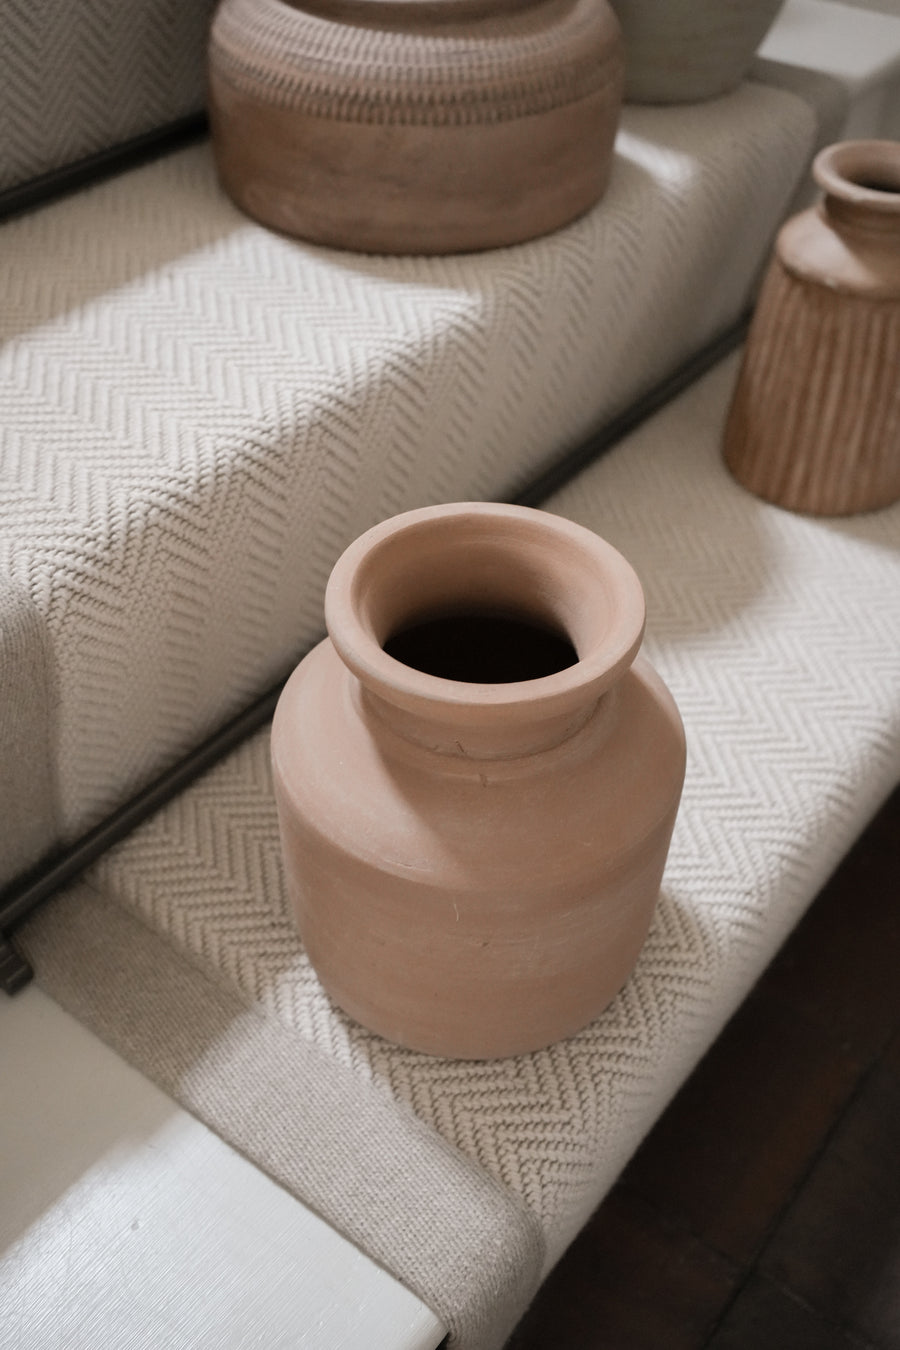 Mala Terracotta Vase